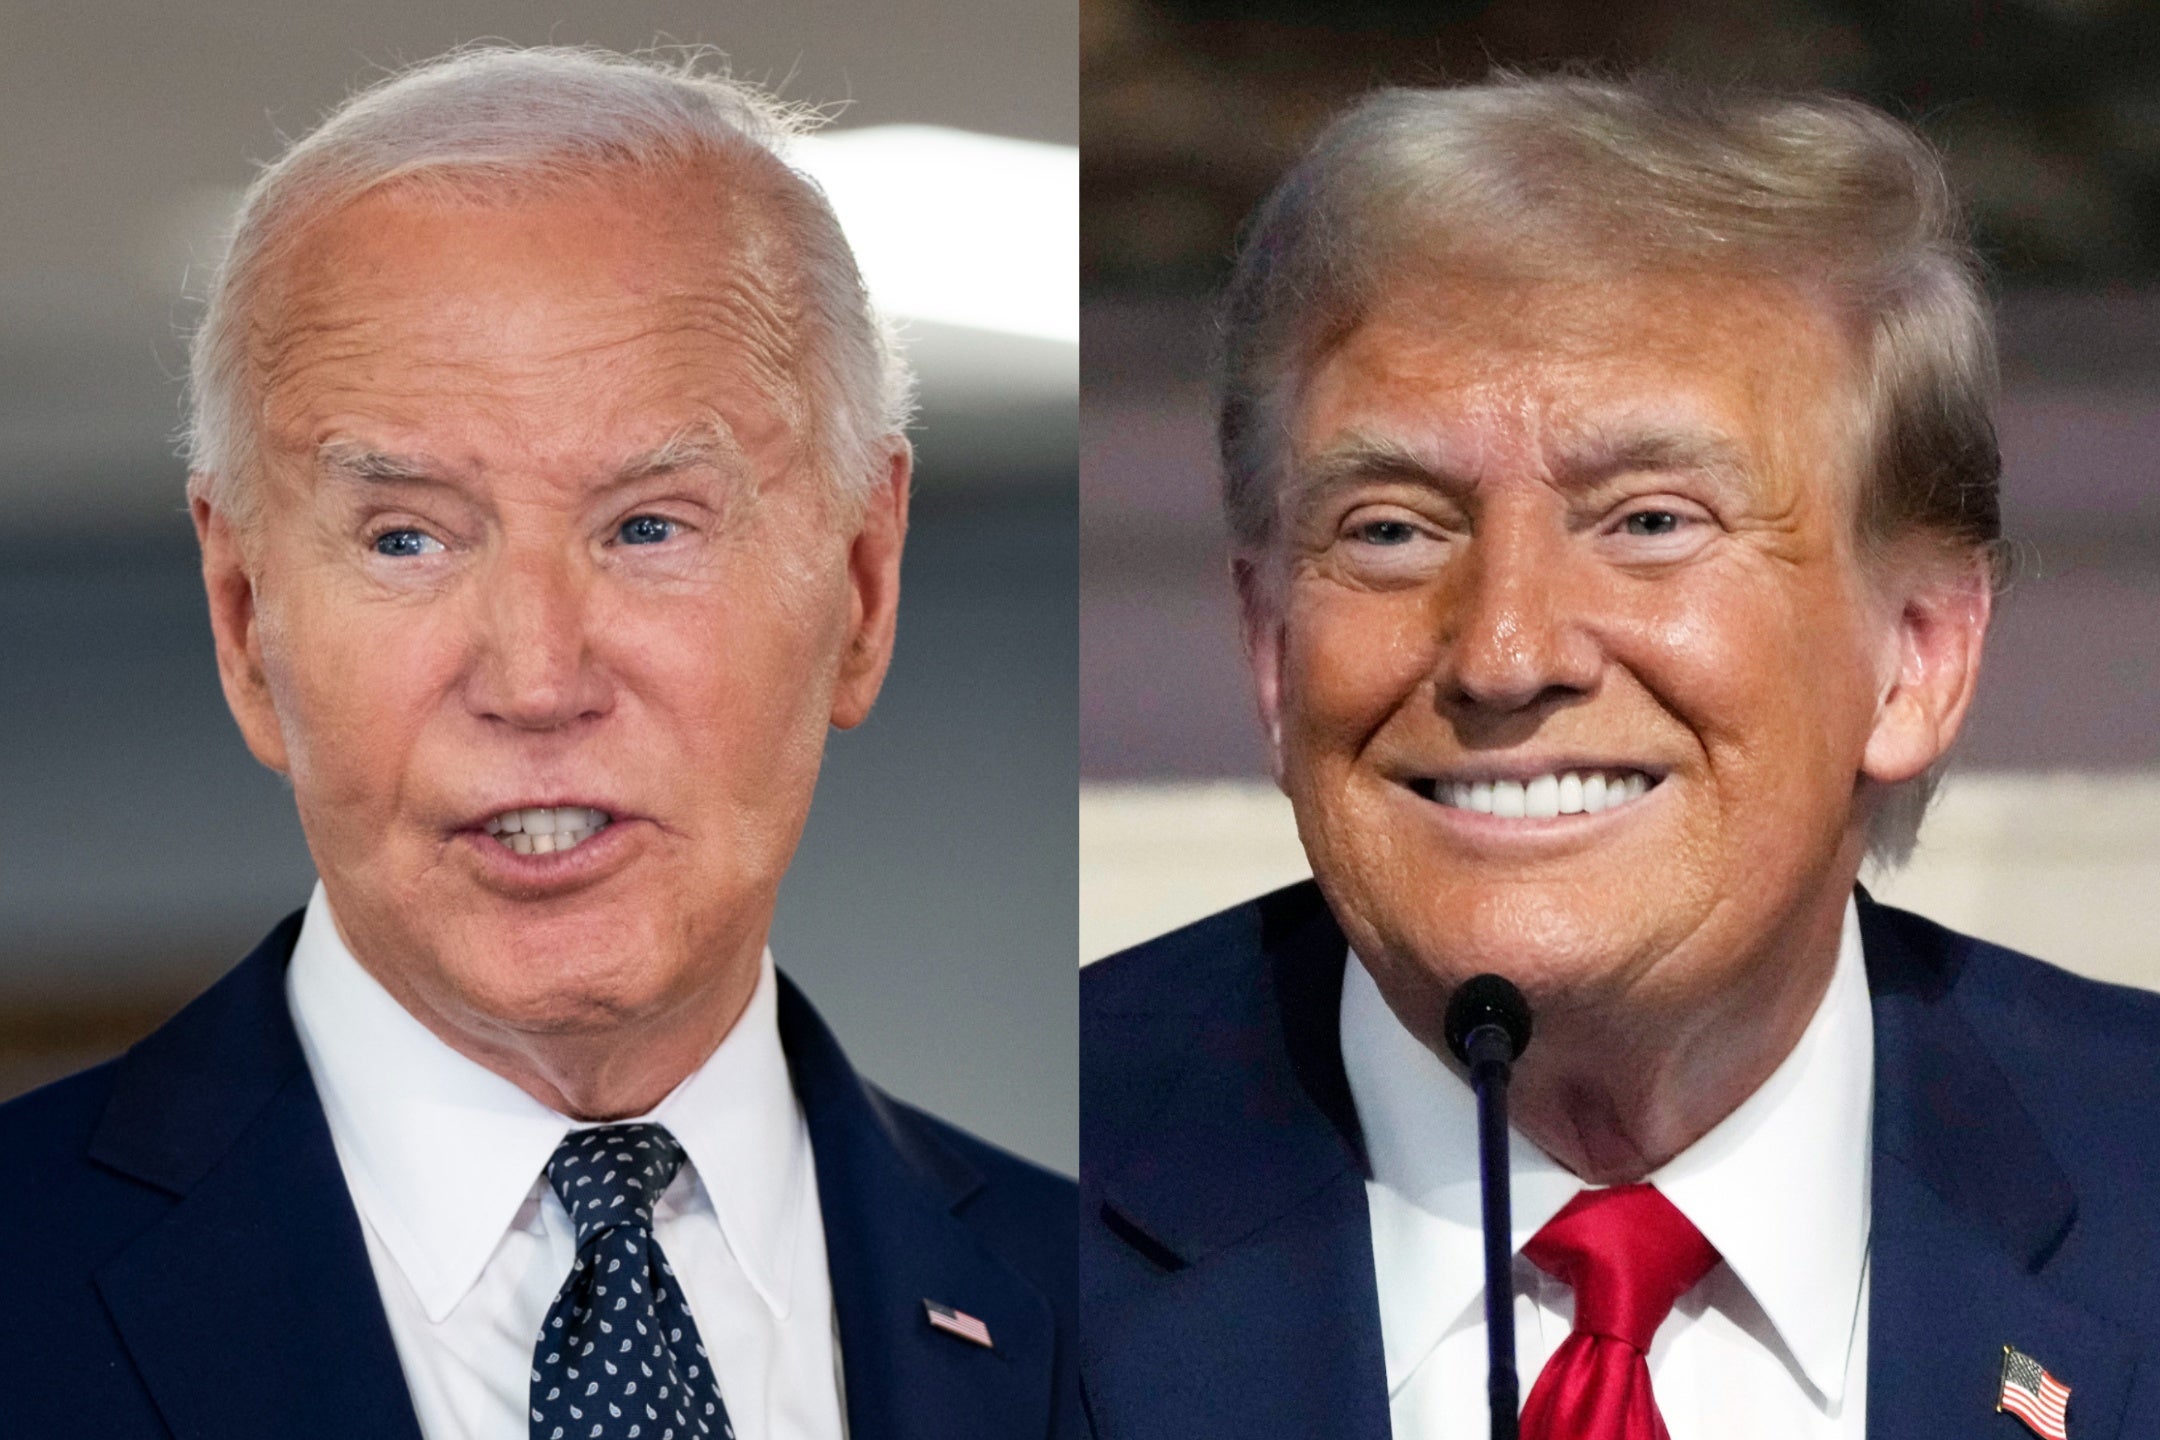 Joe Biden’s campaign raised more than Donald Trump in June, despite the president’s disastrous debate performance last week